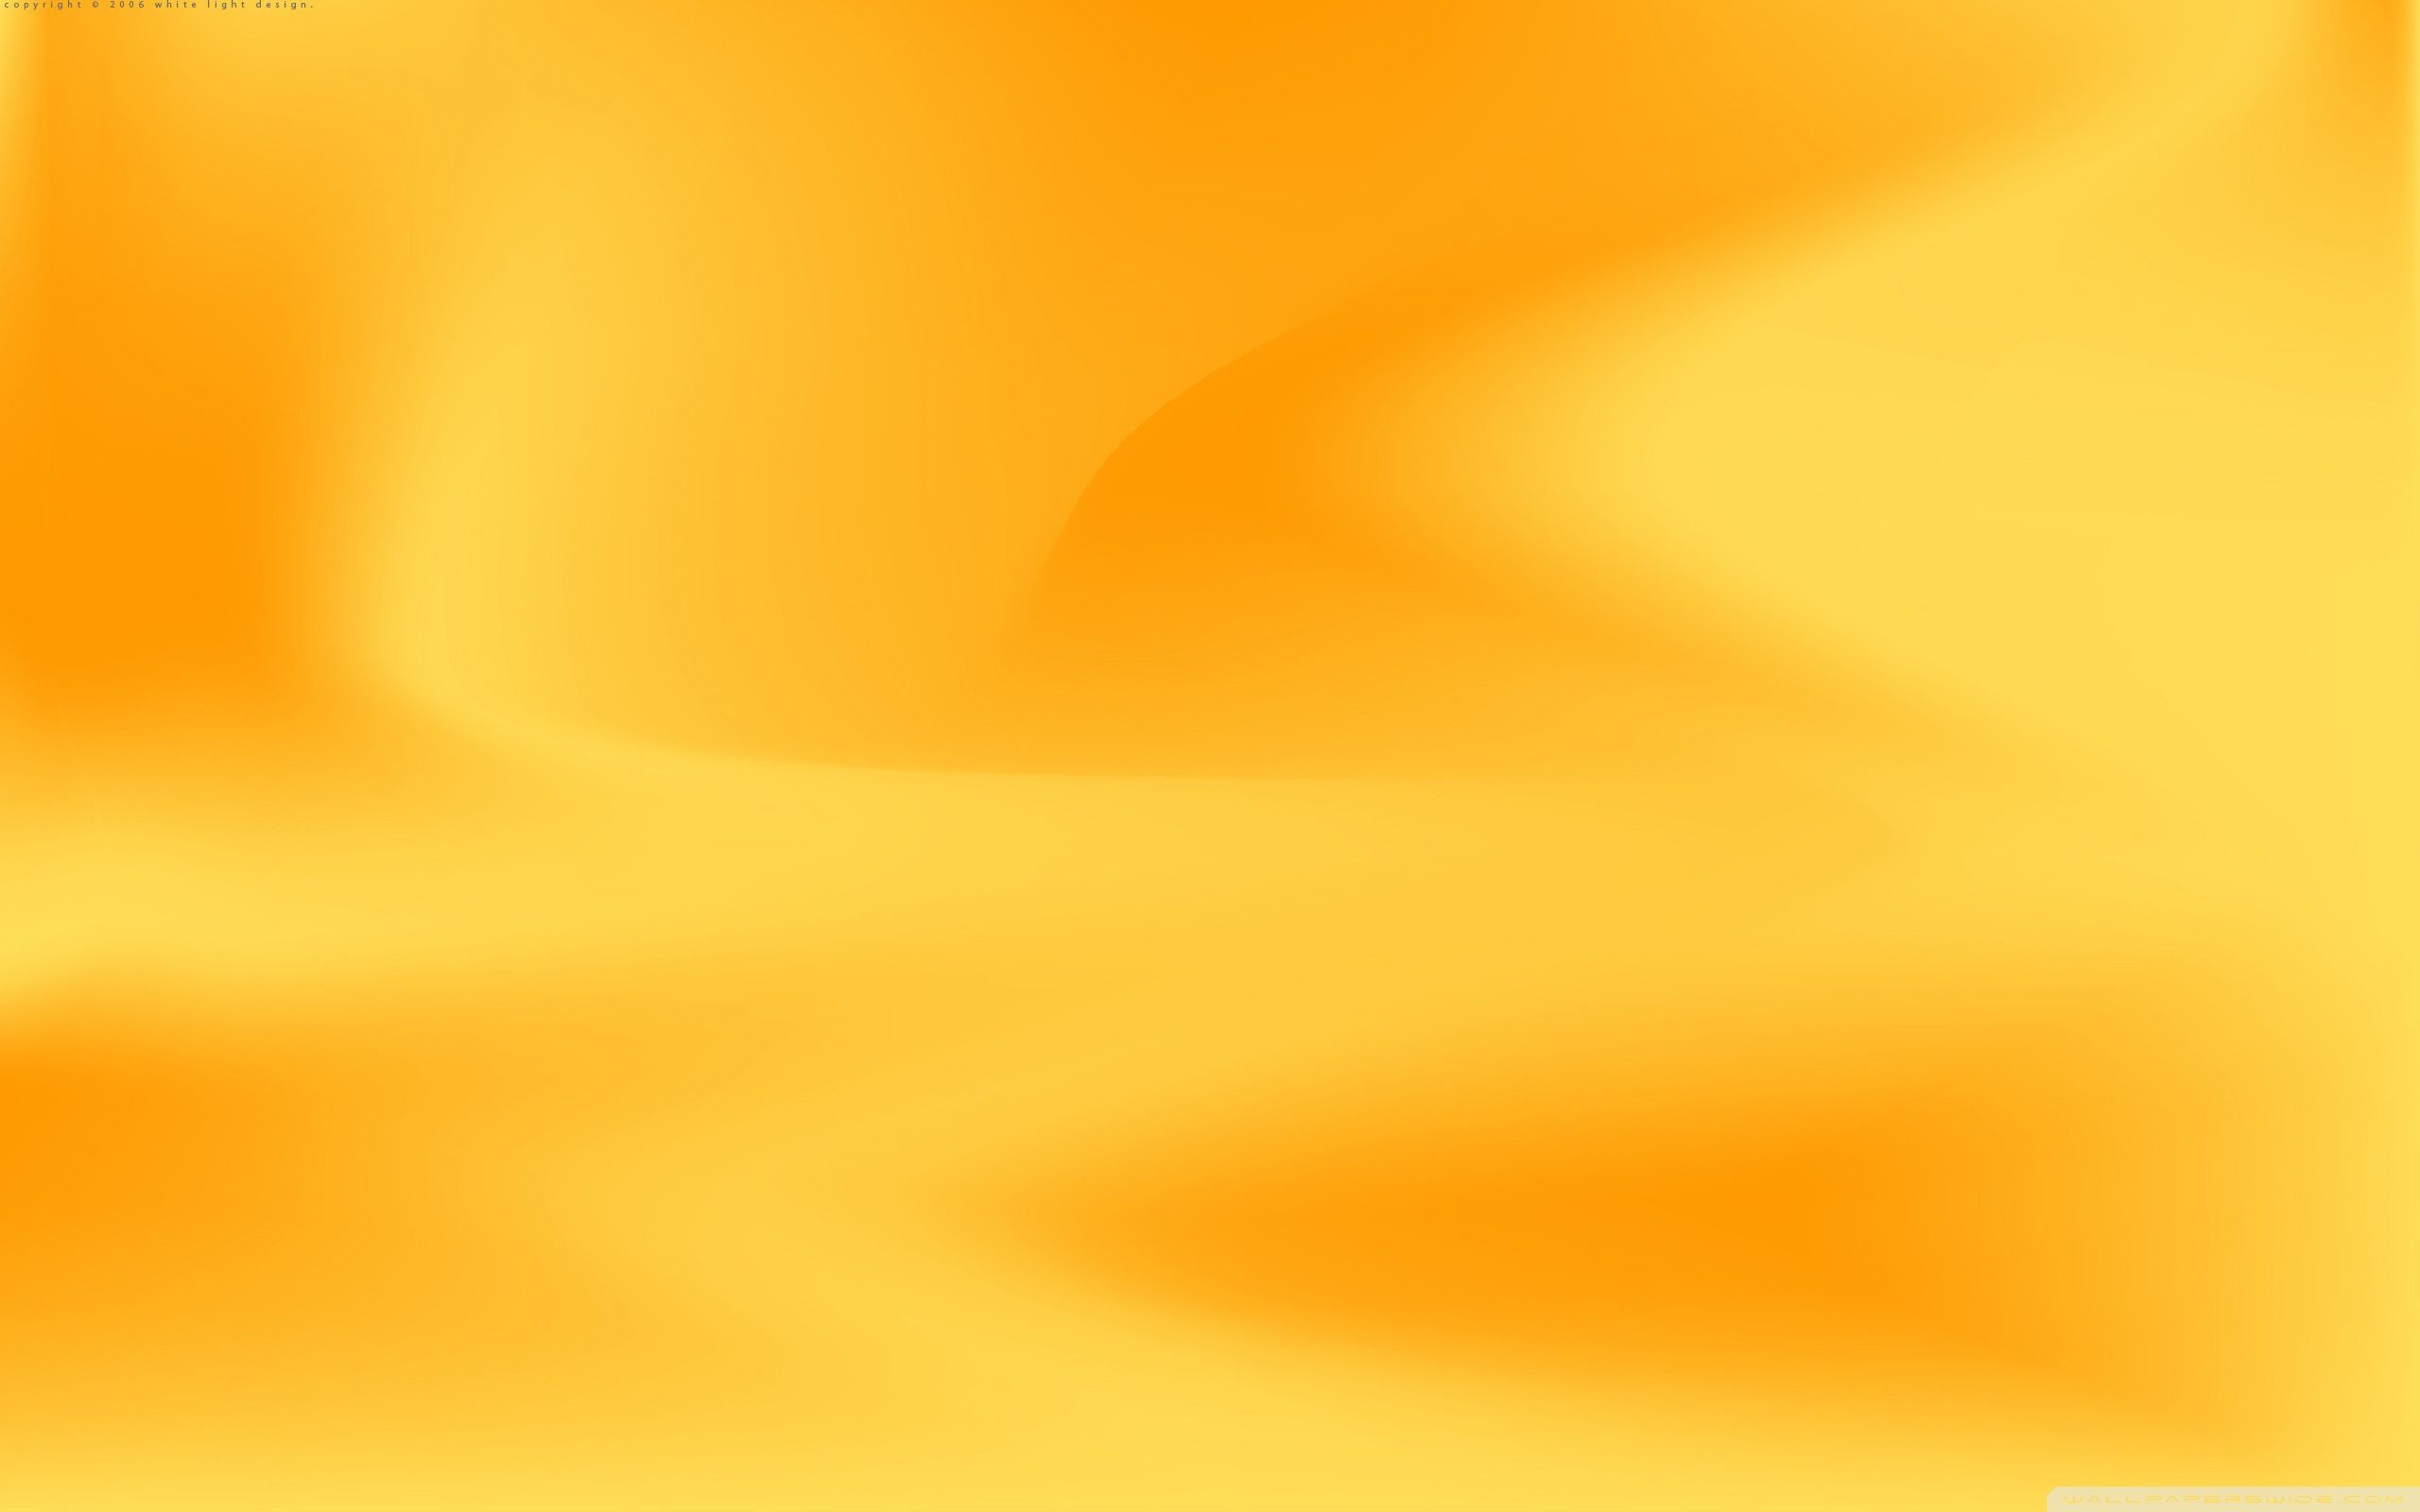 Light Orange Background Images  Free Download on Freepik